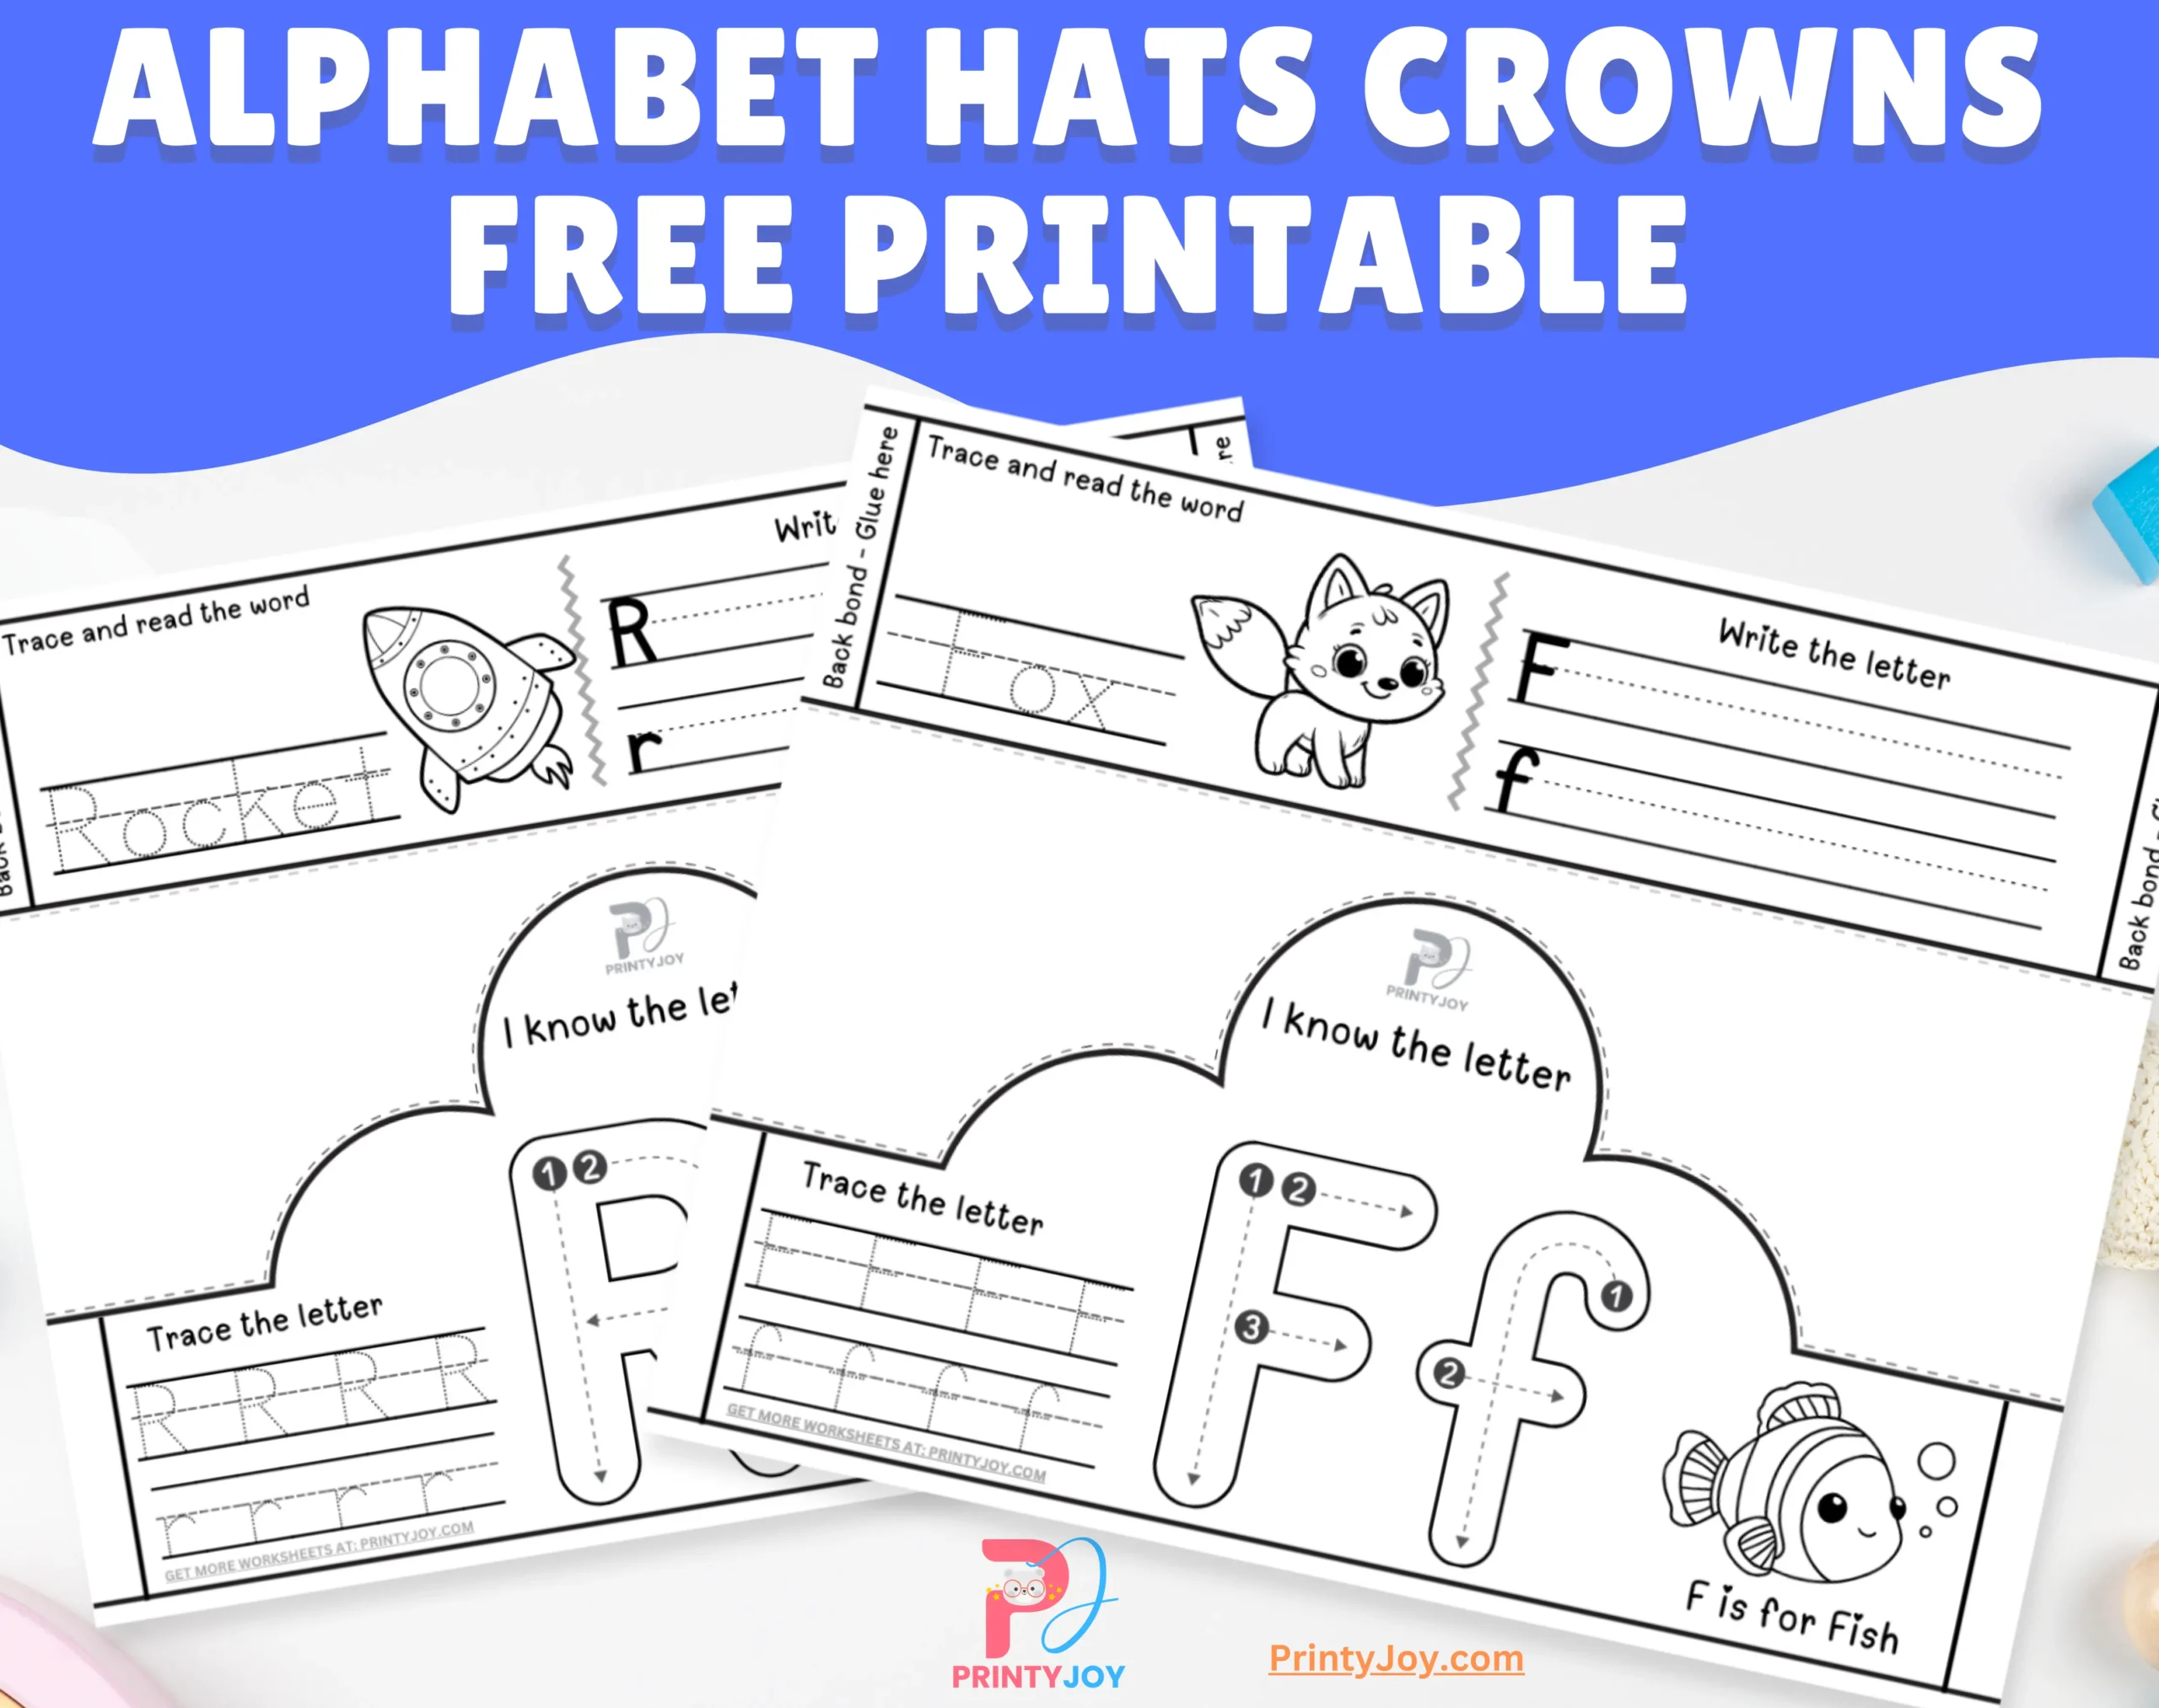 Alphabet Hats Crowns Free Printable